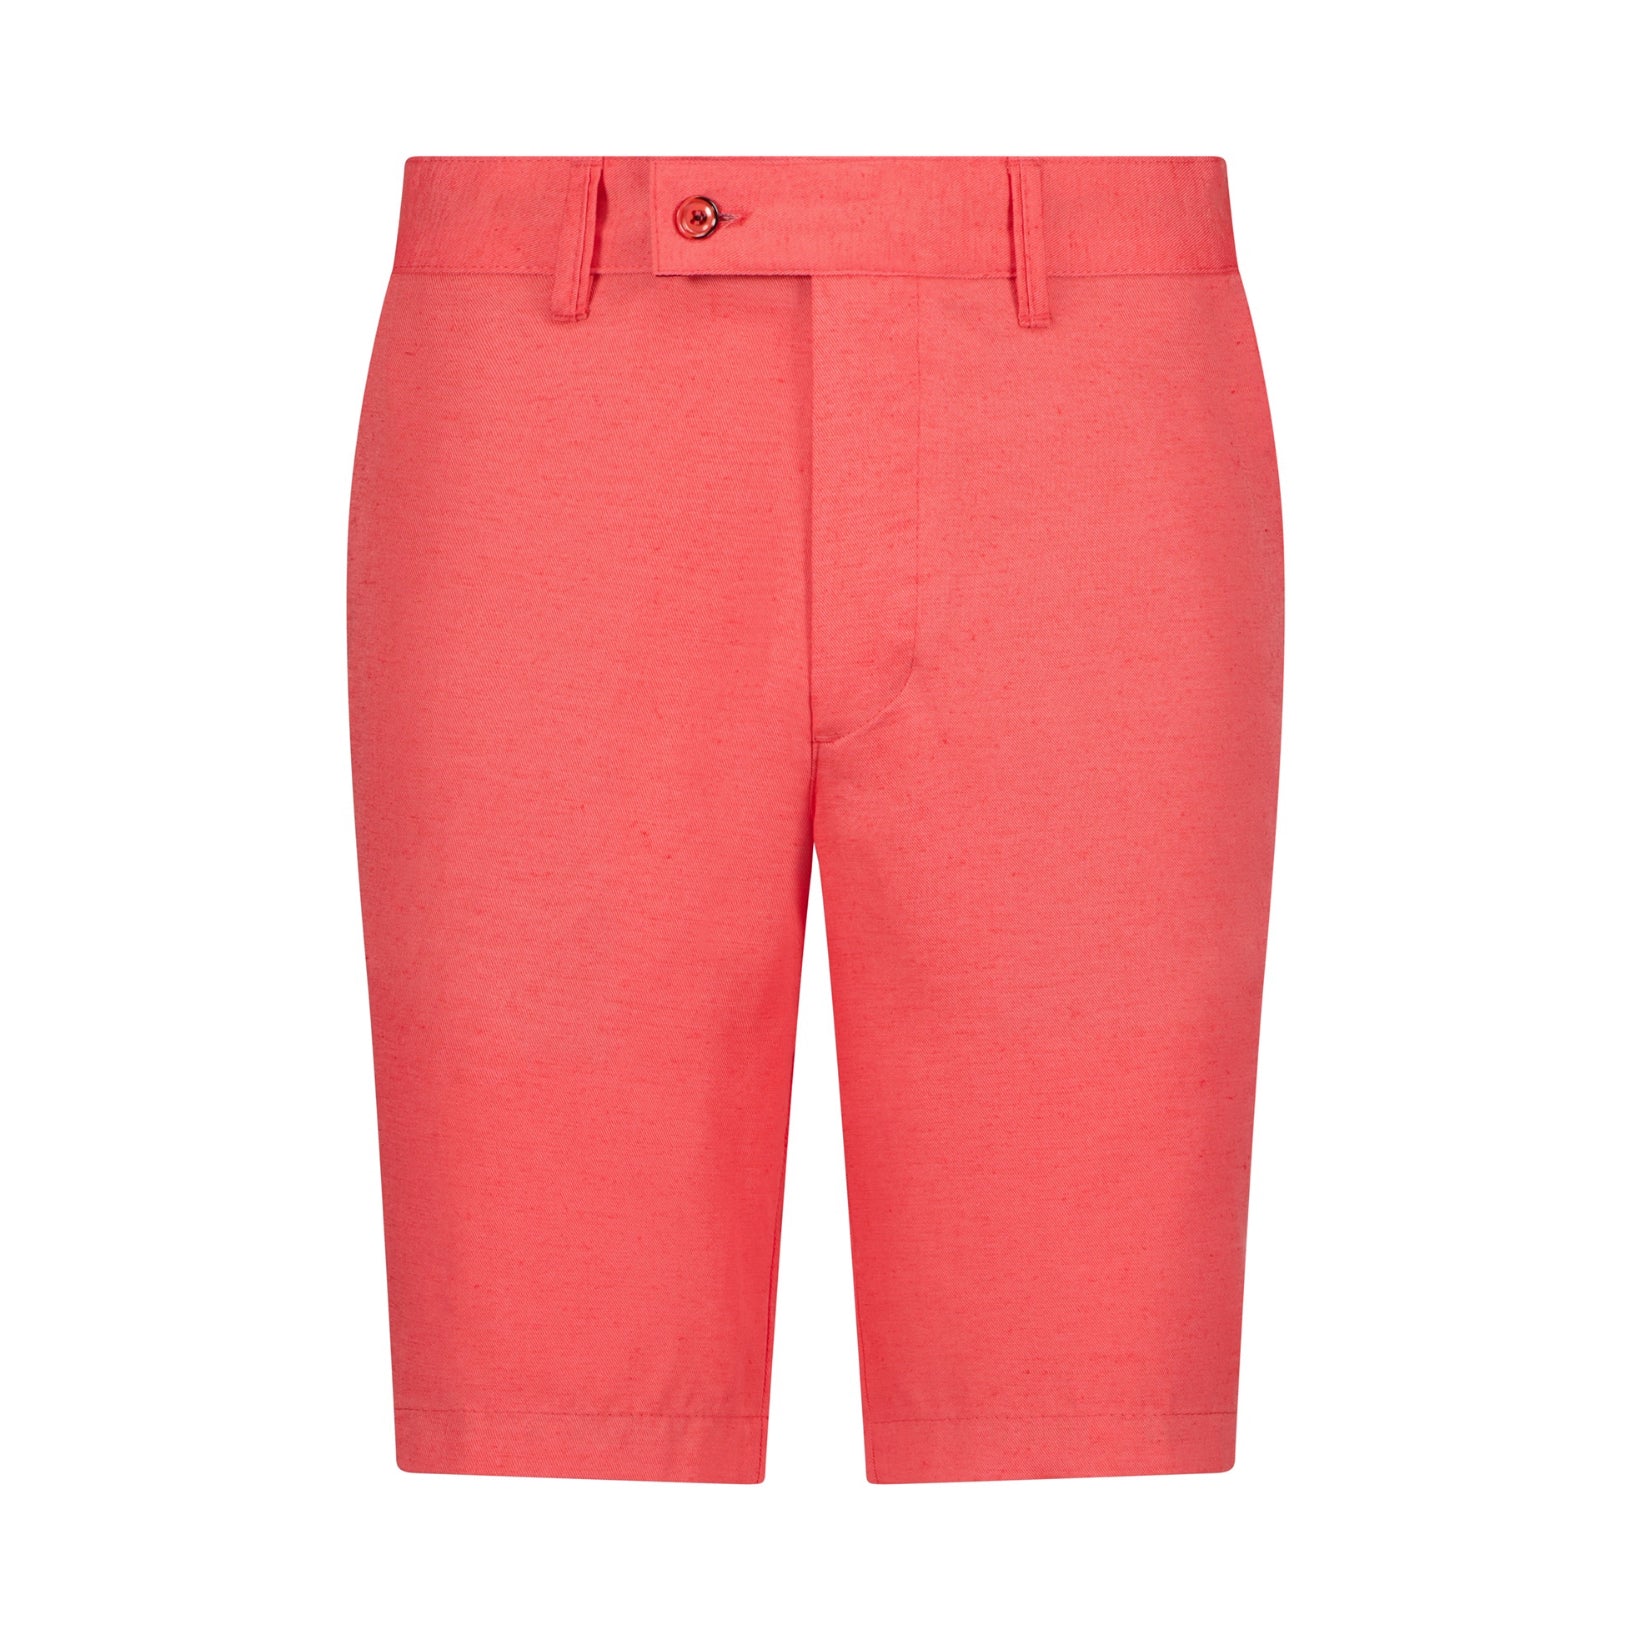 The Dante Linen Shorts - Coral